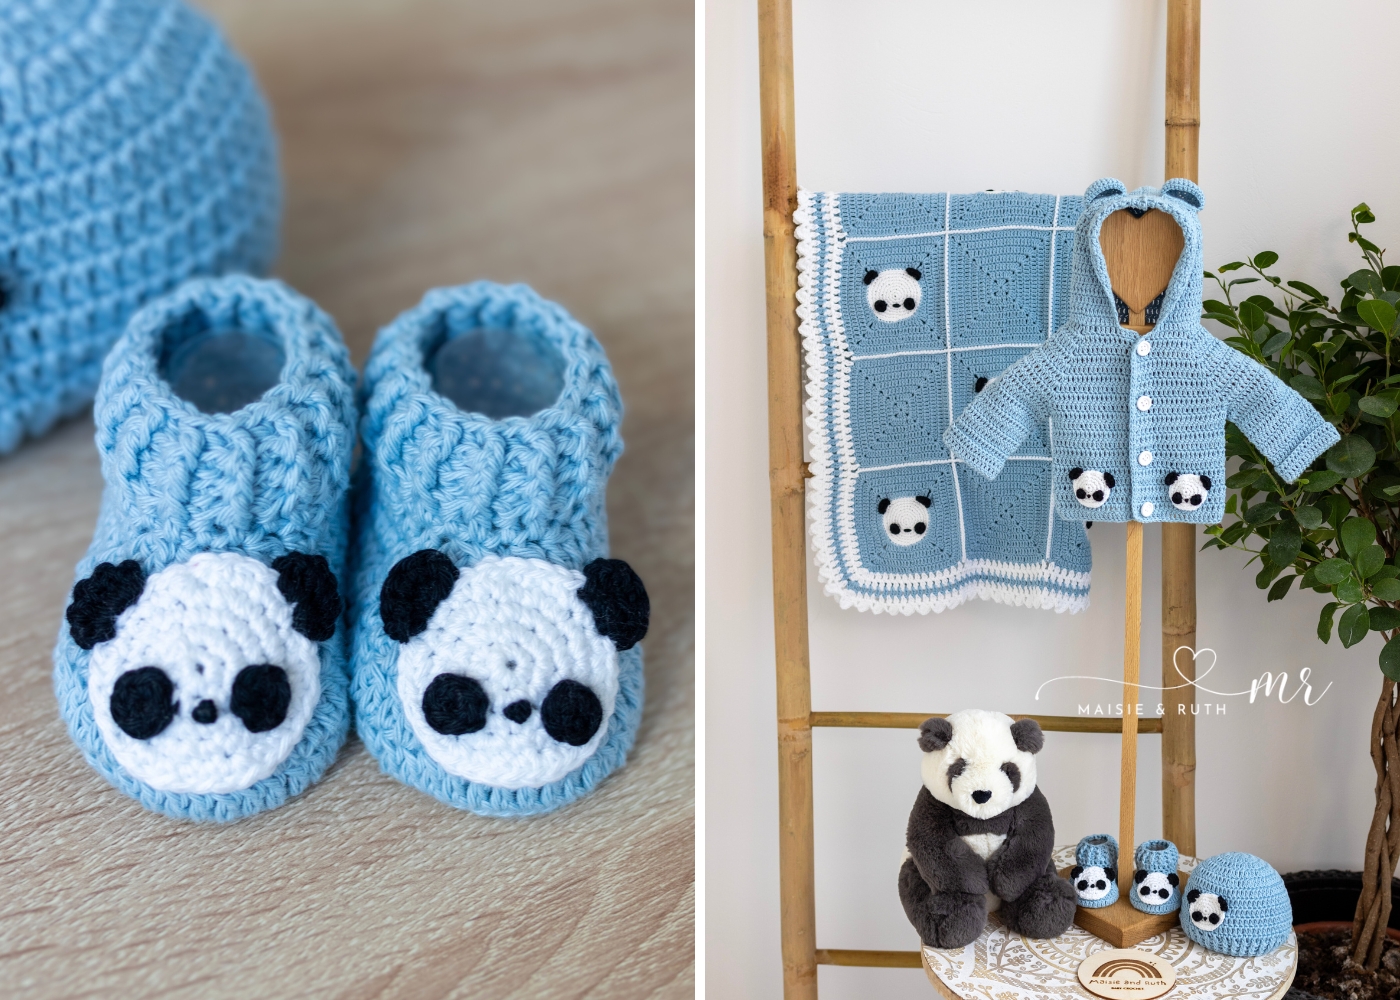 Panda crochet baby booties in layette